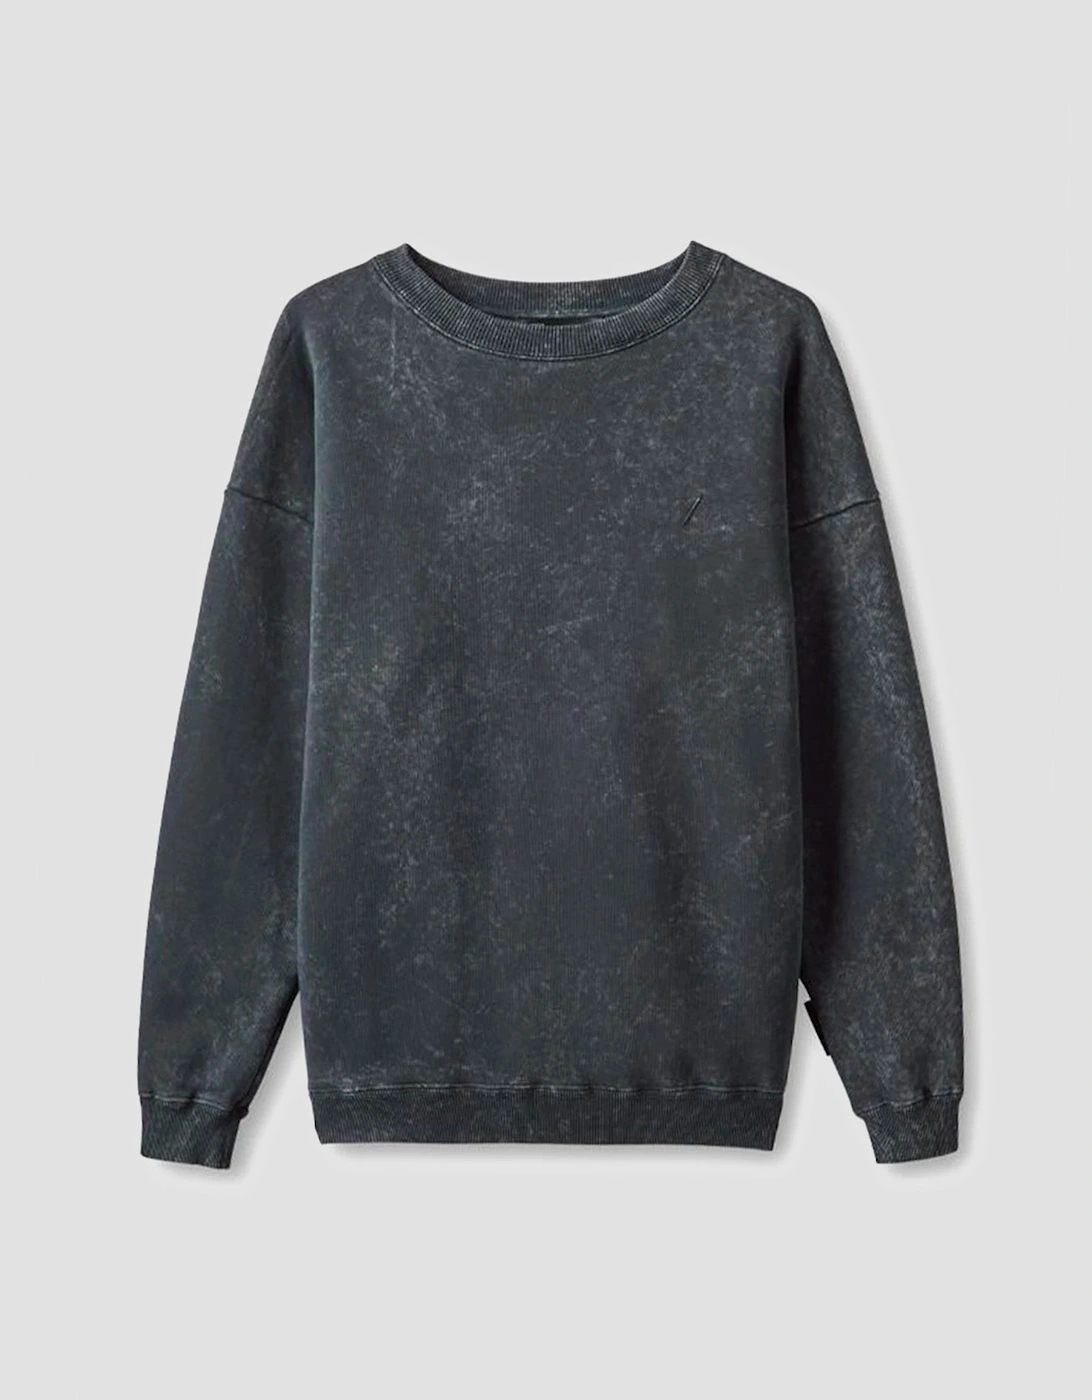 530 Washed Black Sweatshirt (Woman), 9 of 8